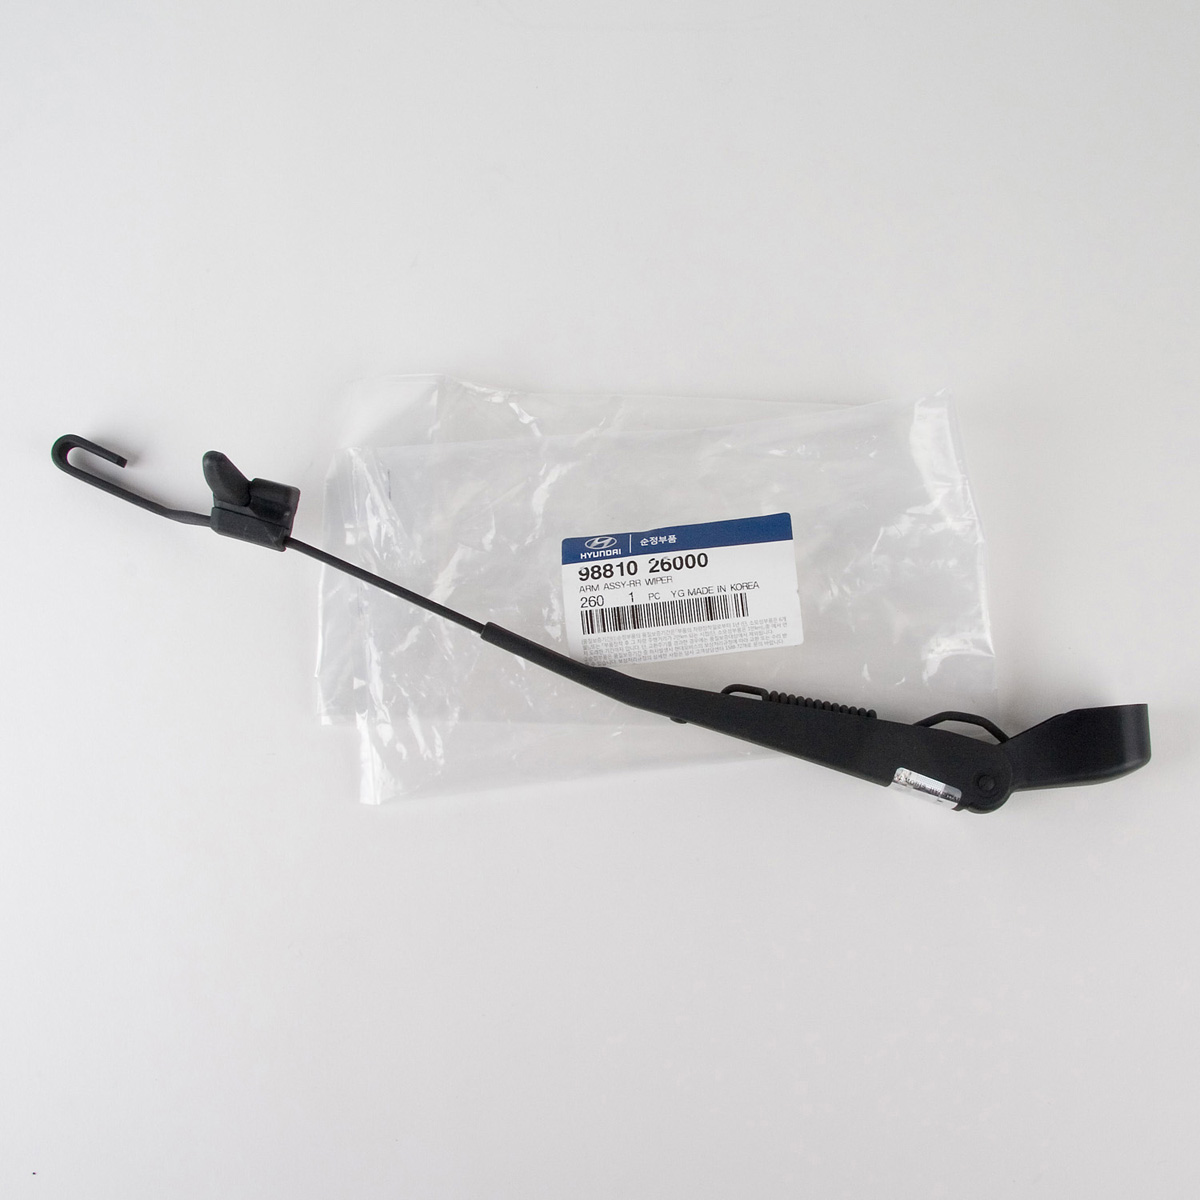 Hyundai Kia (Mobis) Genuine OEM Rear Wiper Arm part #98810 26000 1PC